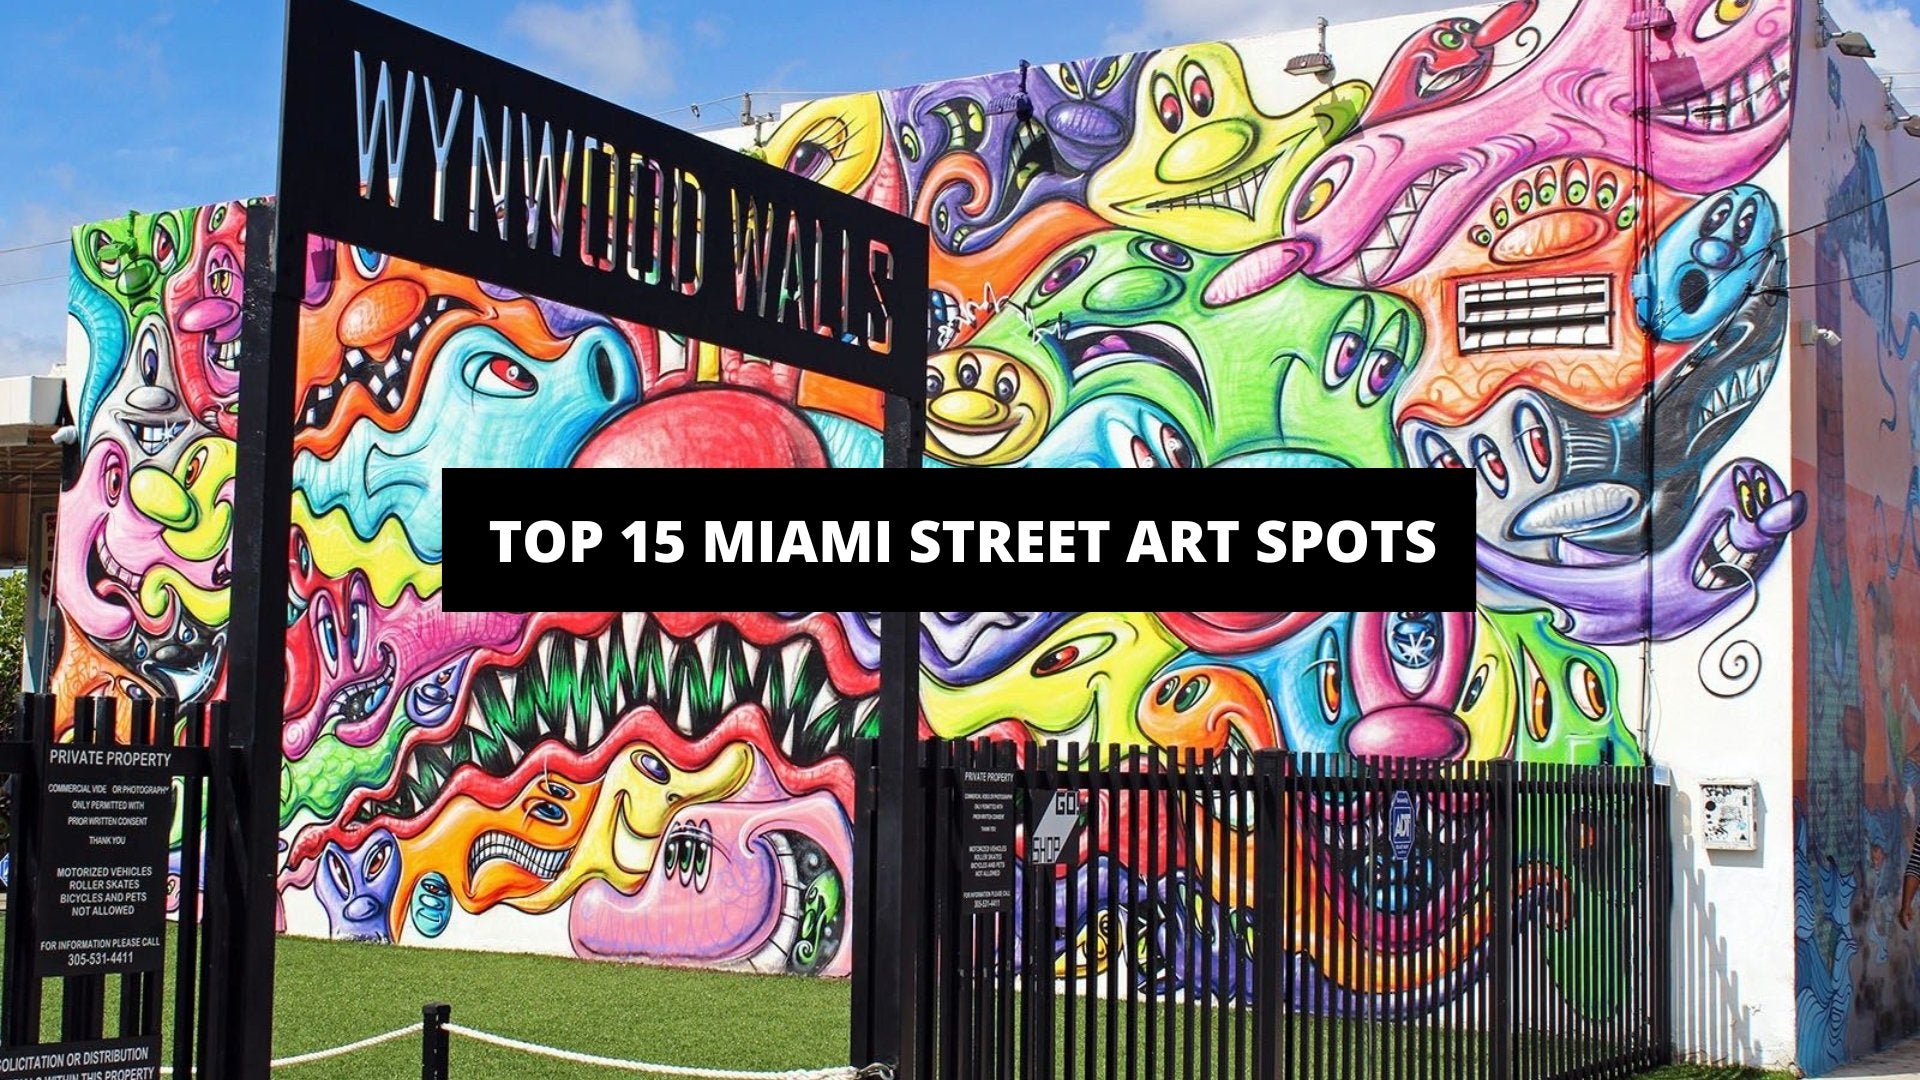 Top 15 Miami Street Art Spots - The Trendy Art